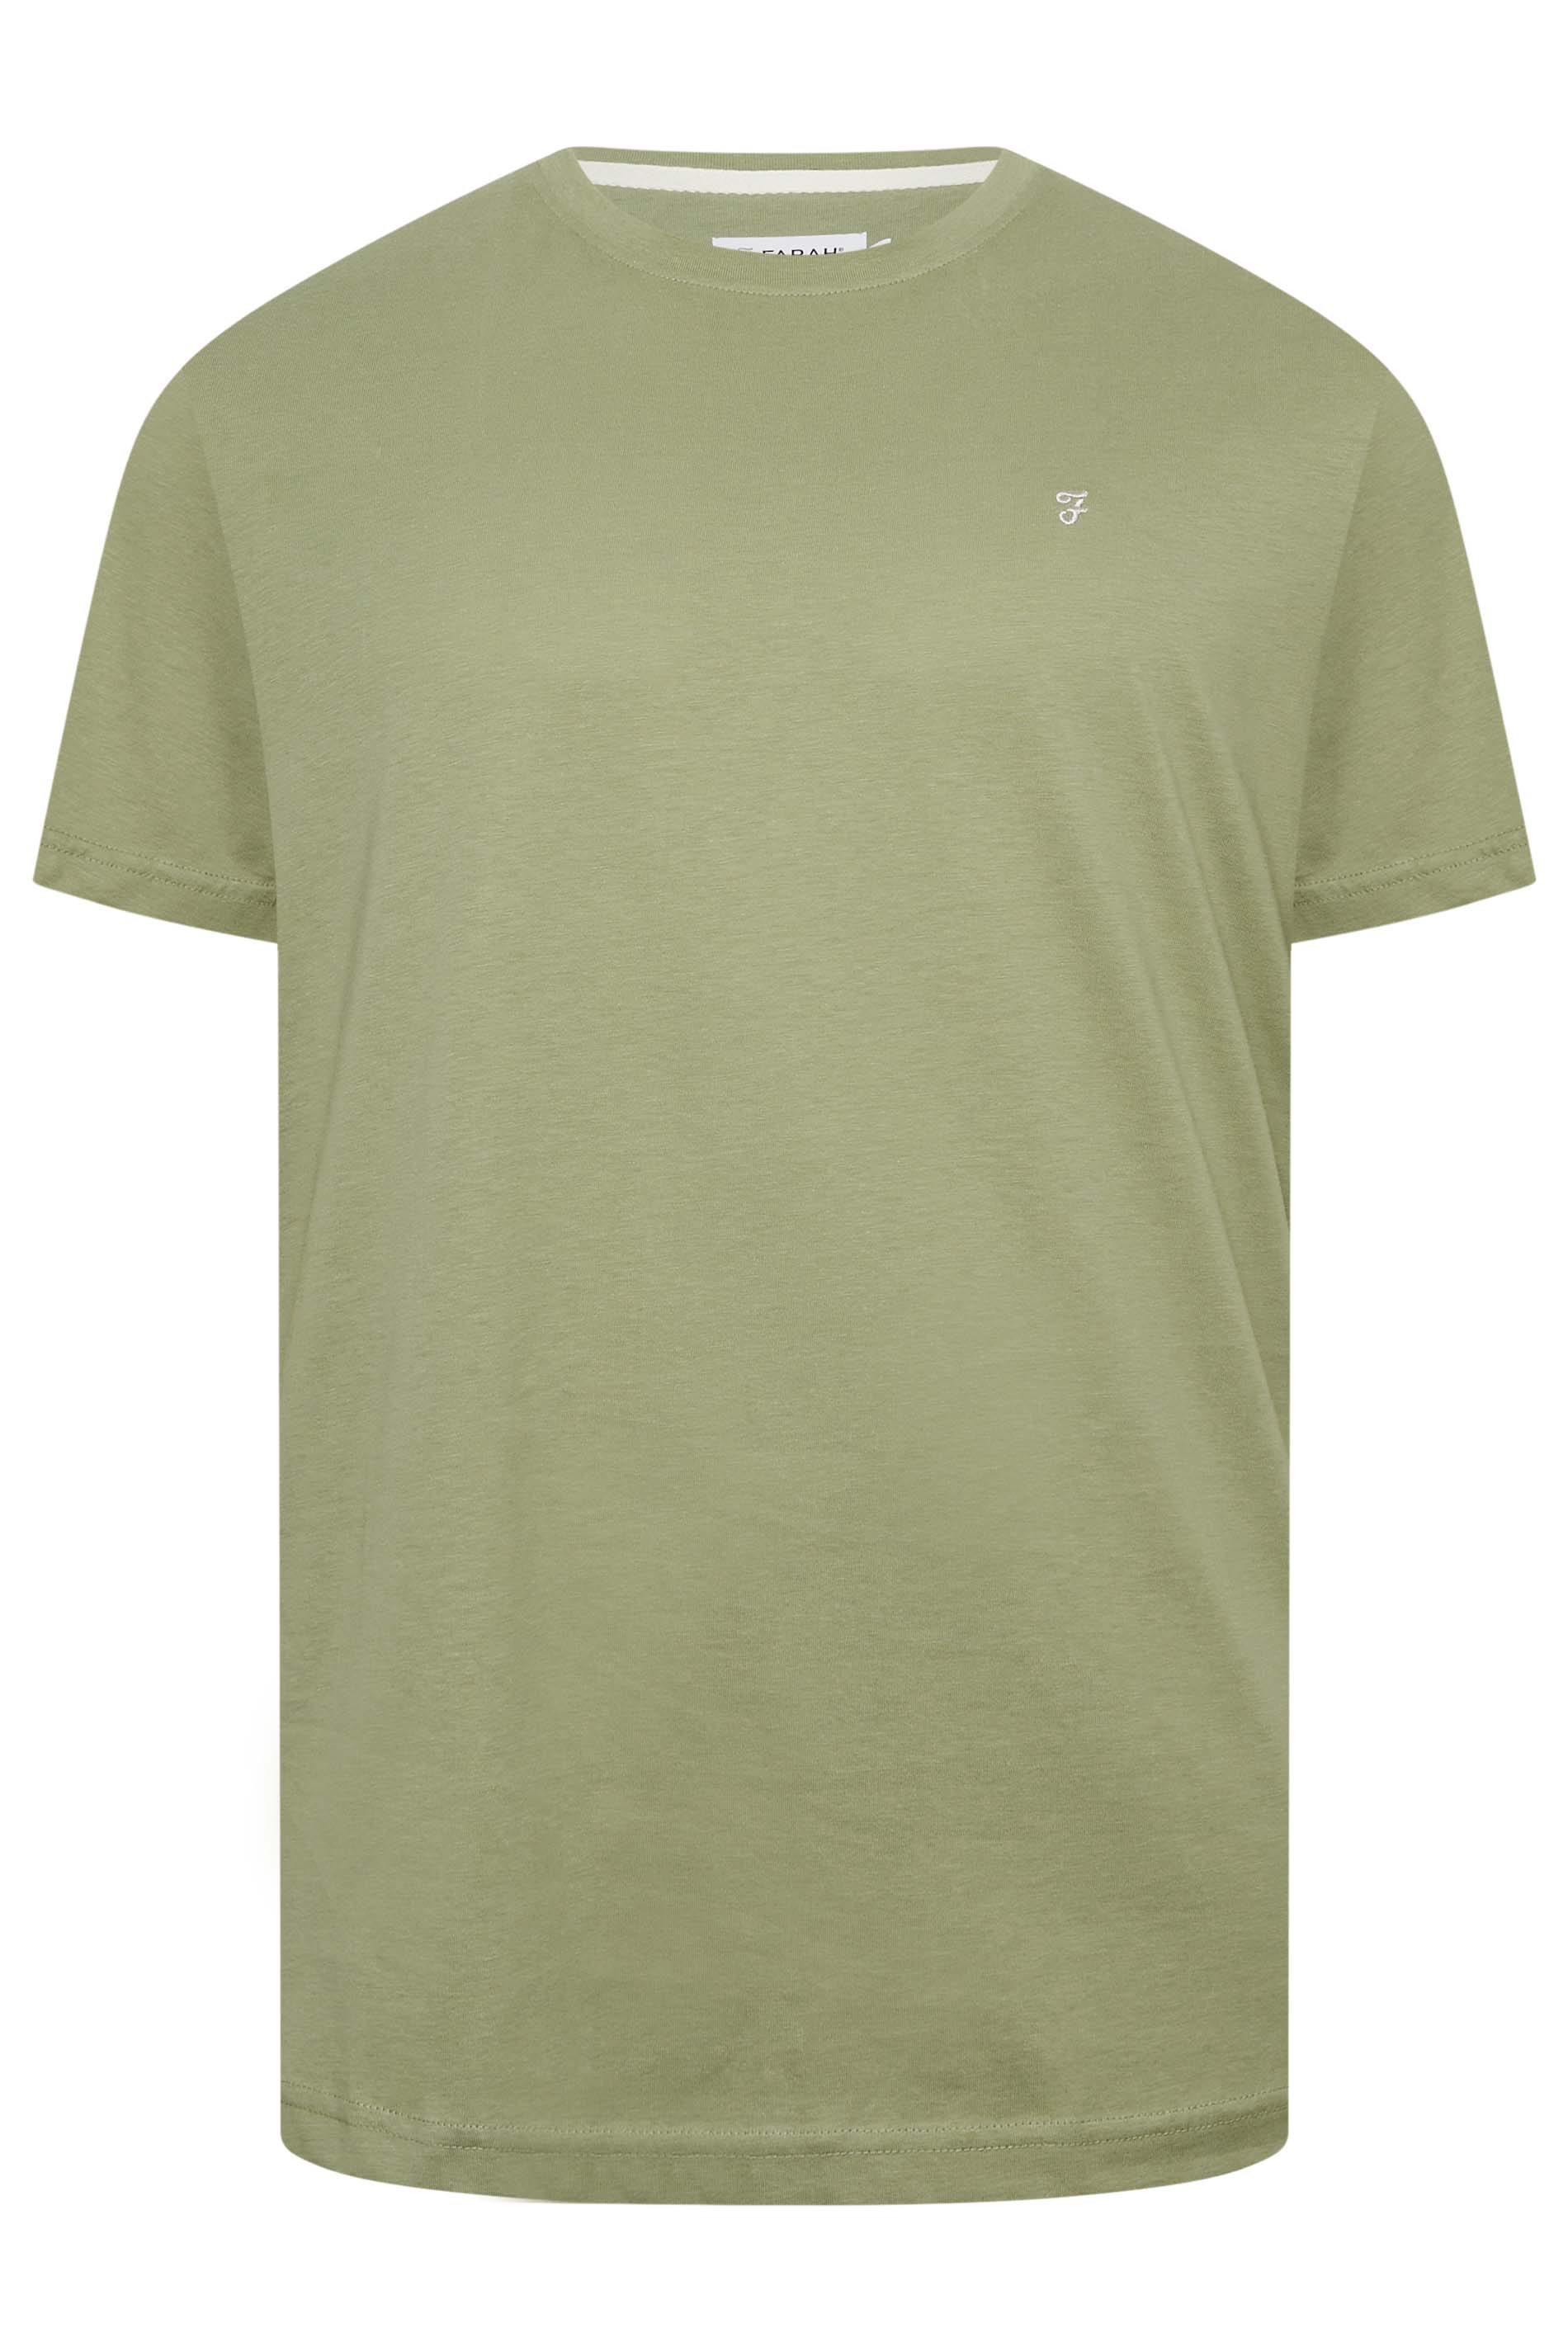 FARAH Big & Tall Green T-Shirt | BadRhino 3